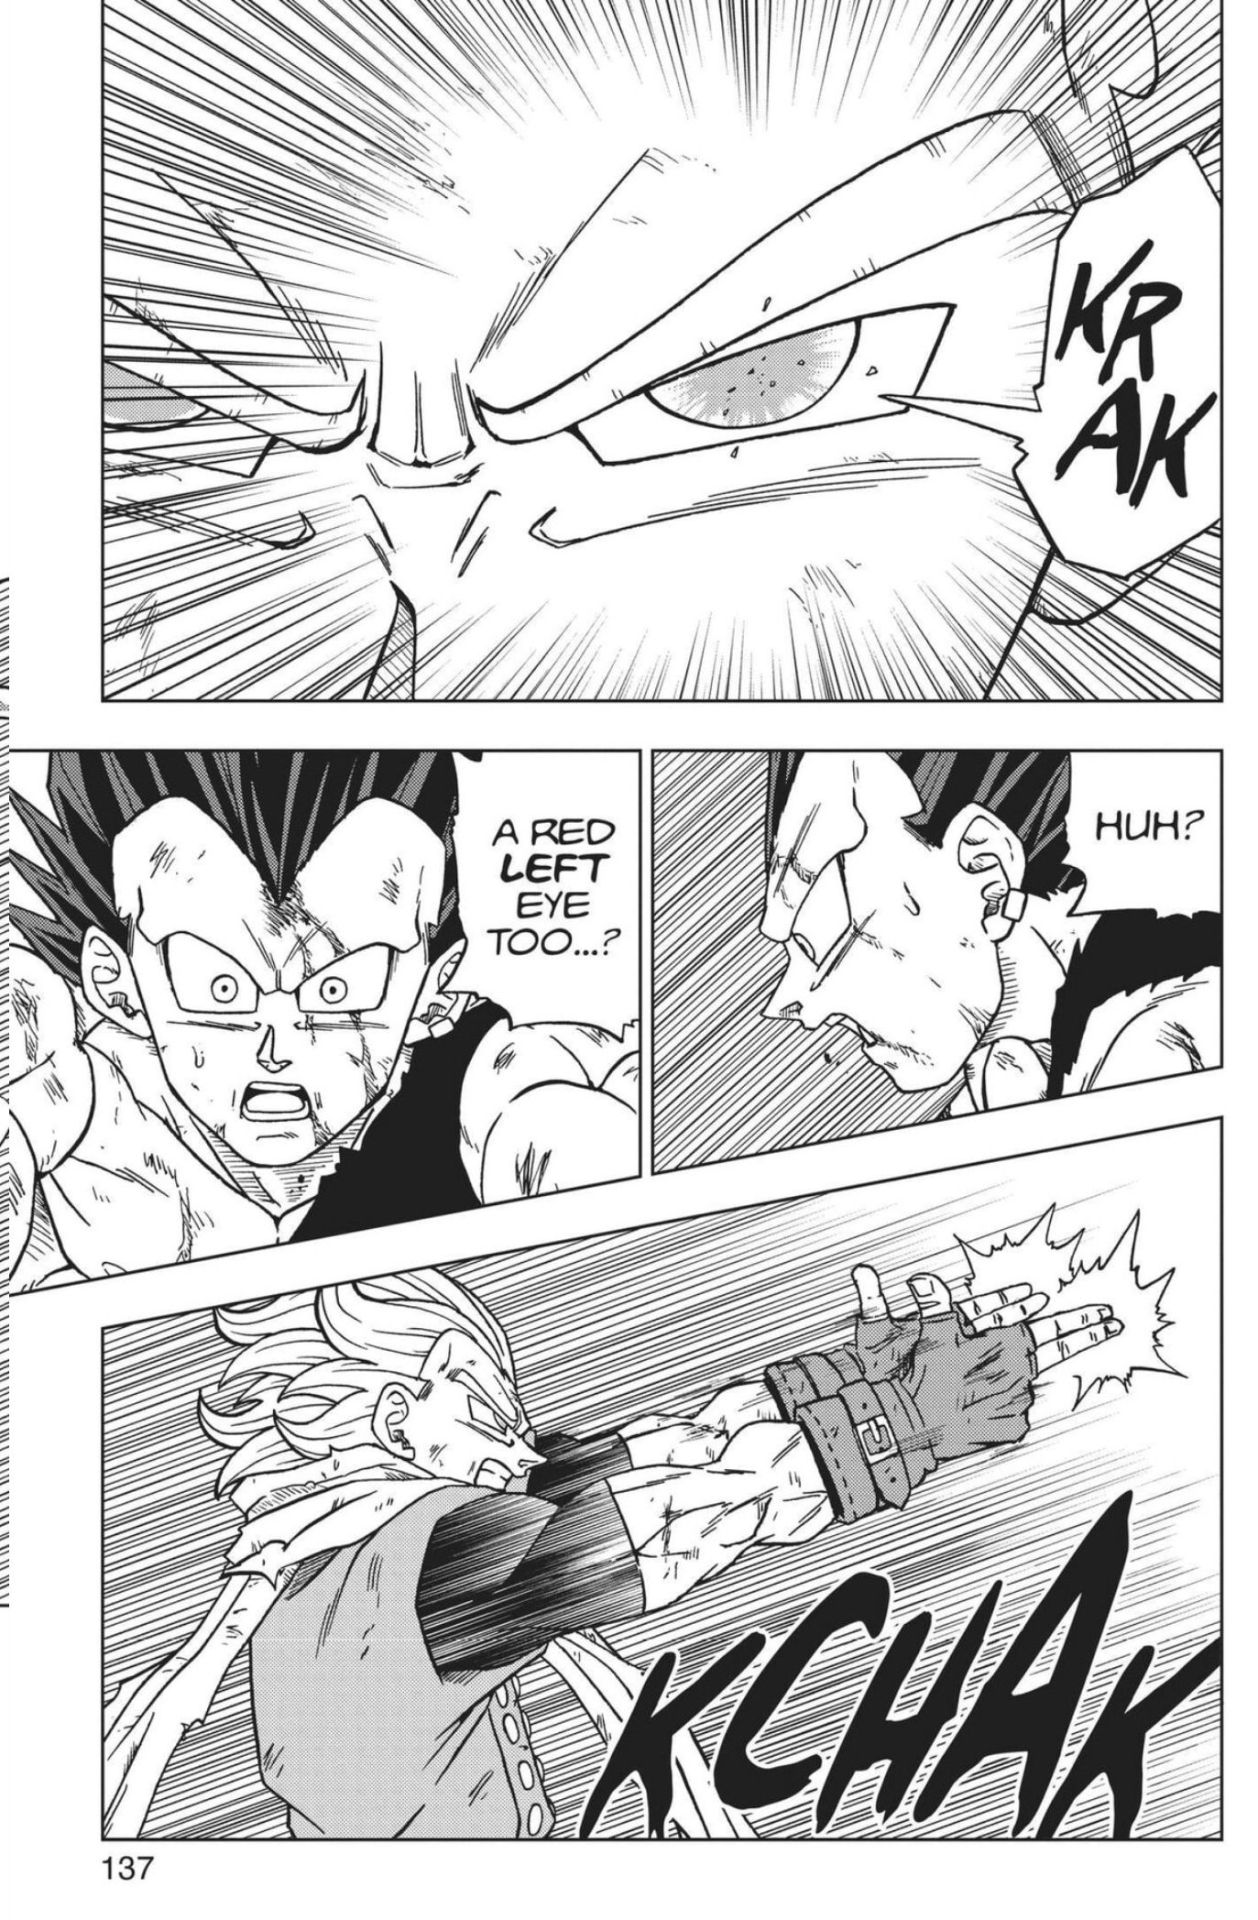 DUHRAGON BALL — Dragon Ball Super manga ch. 74-76